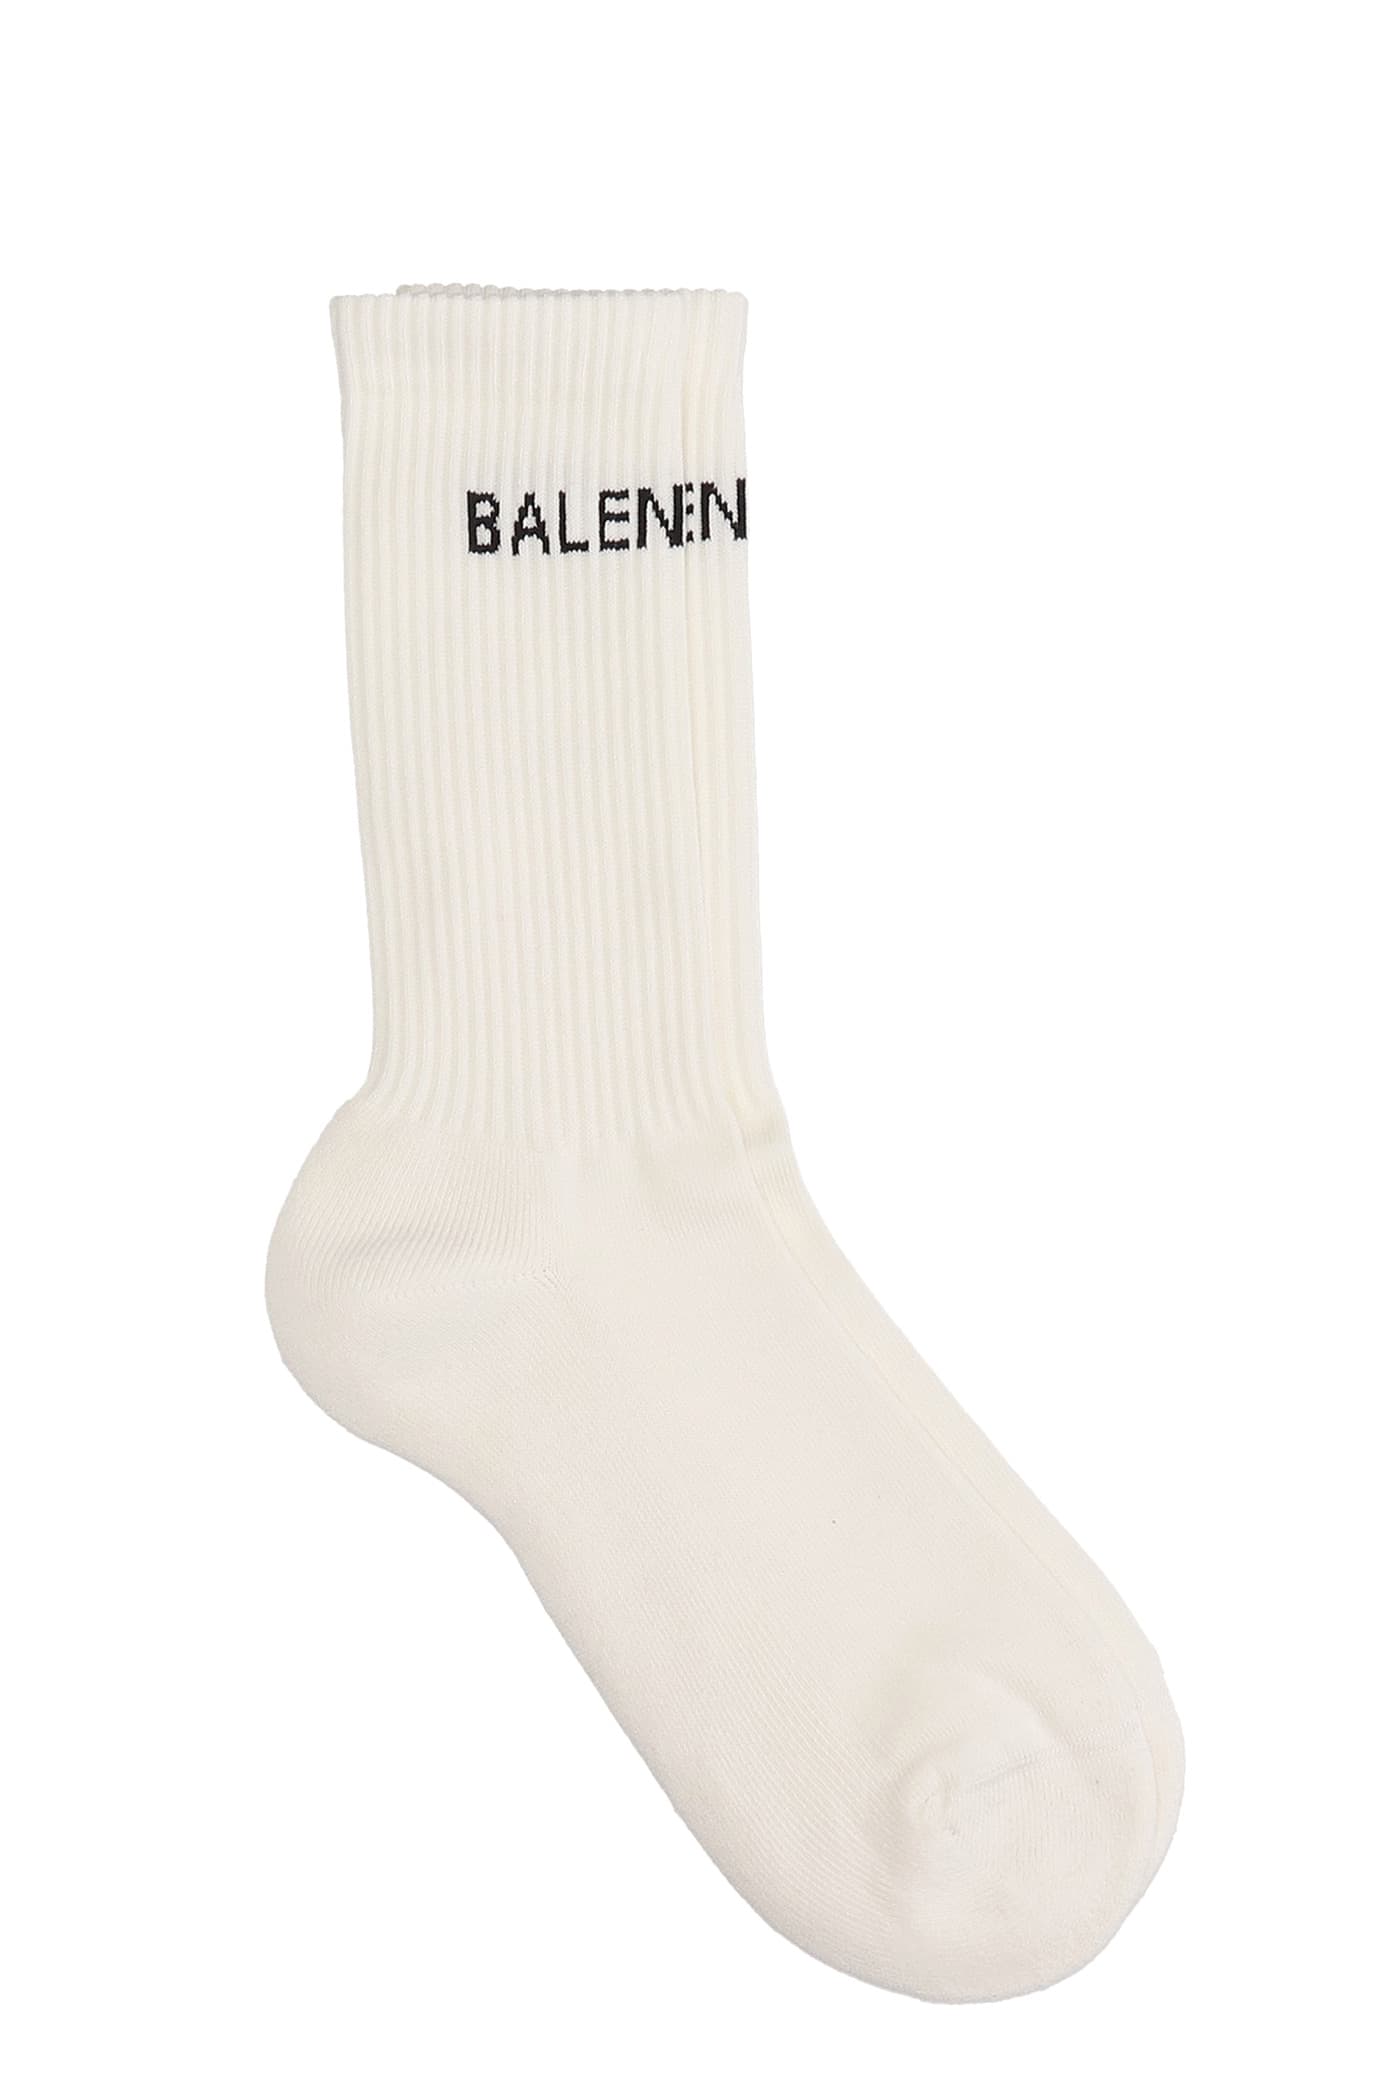 Balenciaga Socks In Beige Cotton